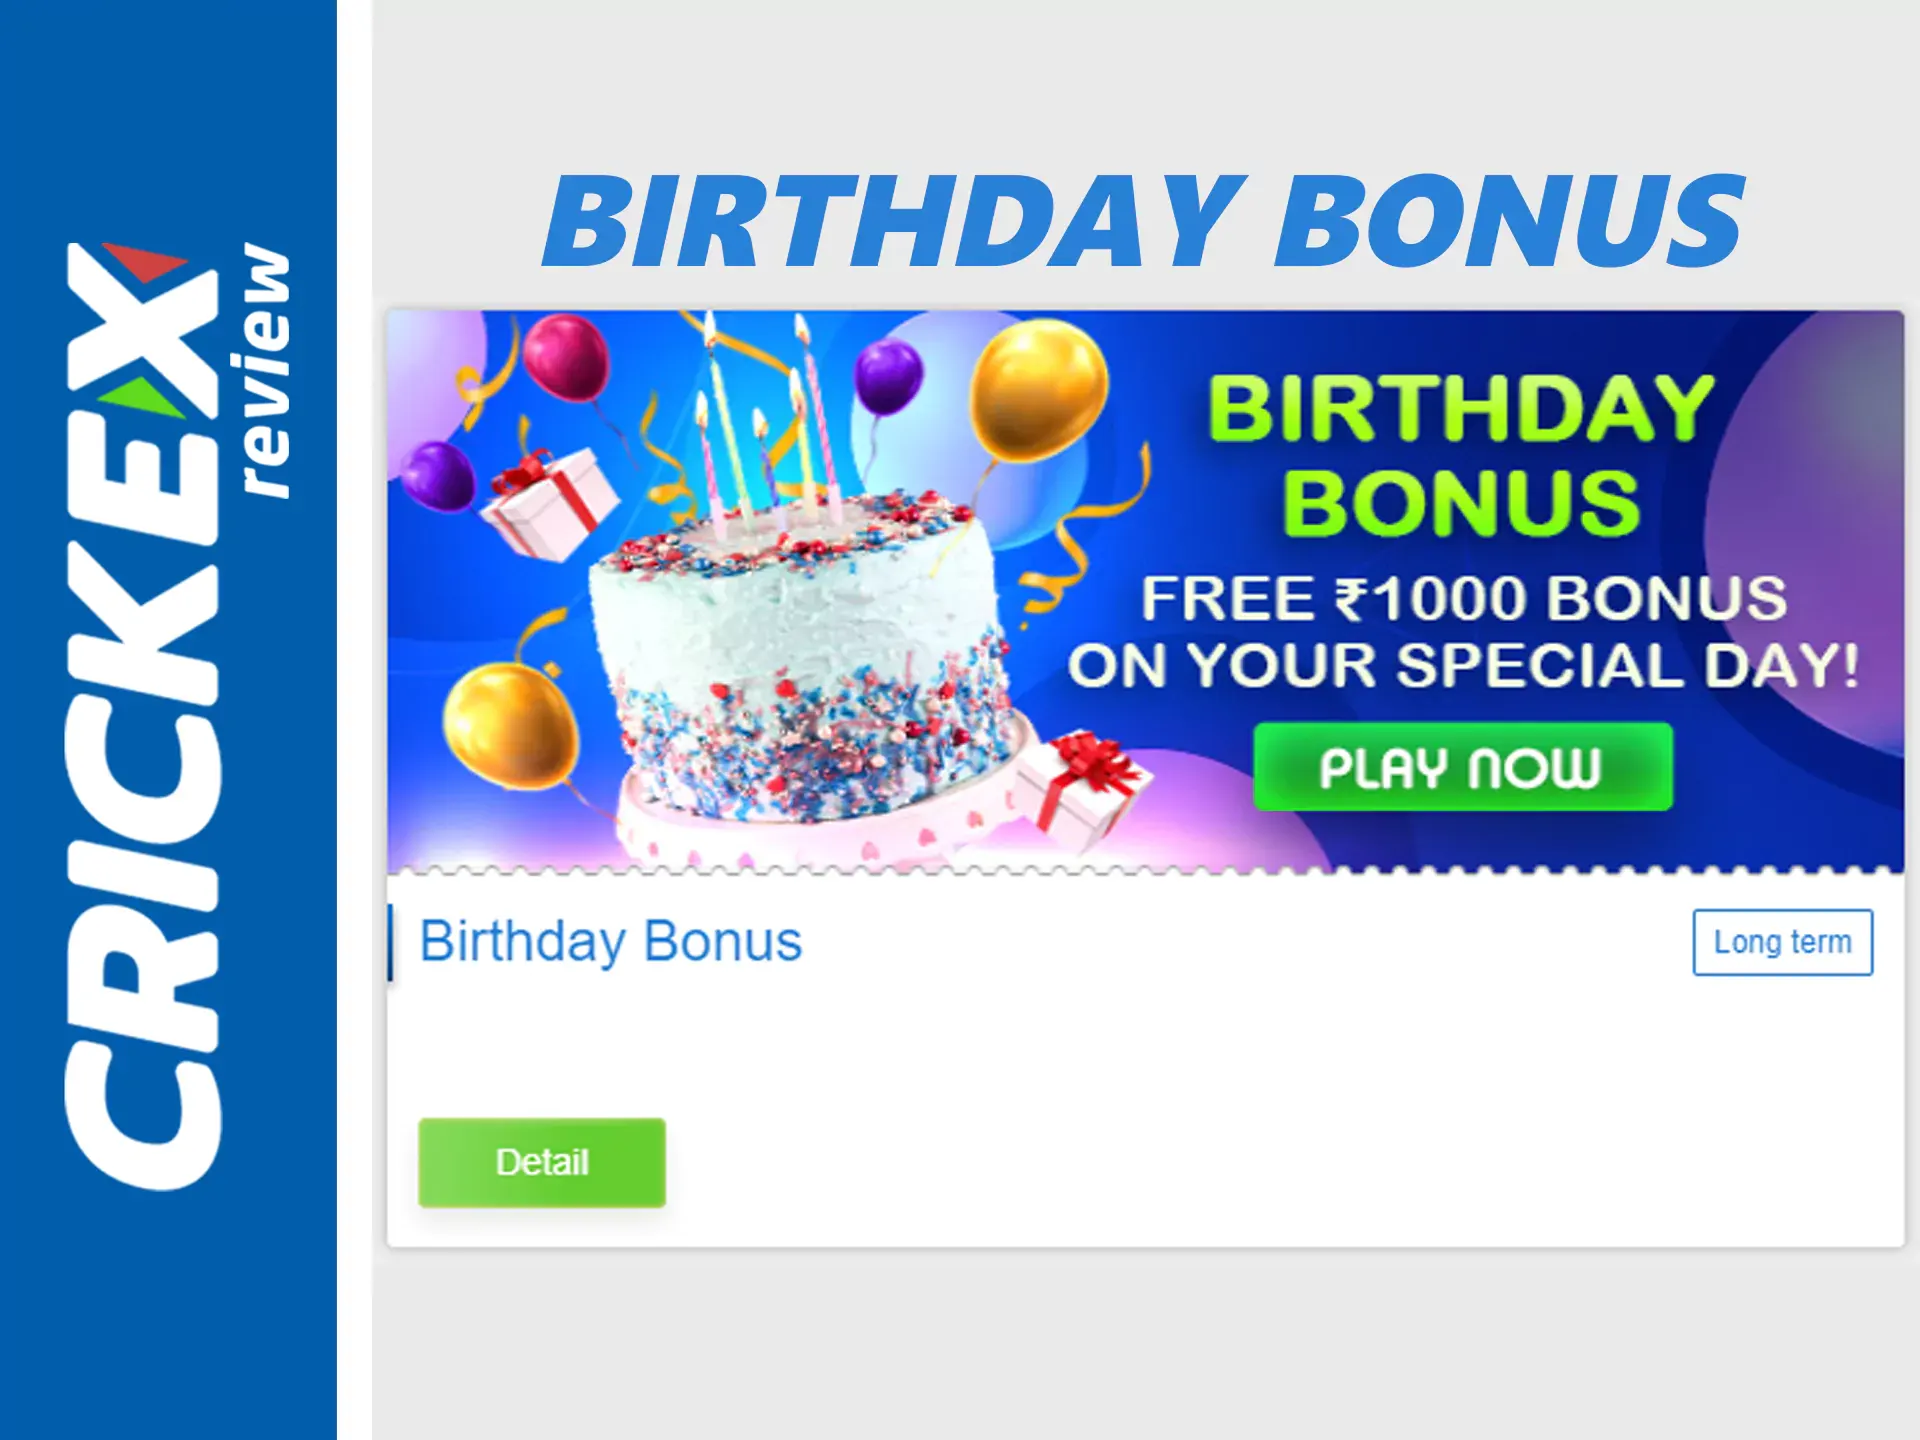 Get bonuses at your birthday.